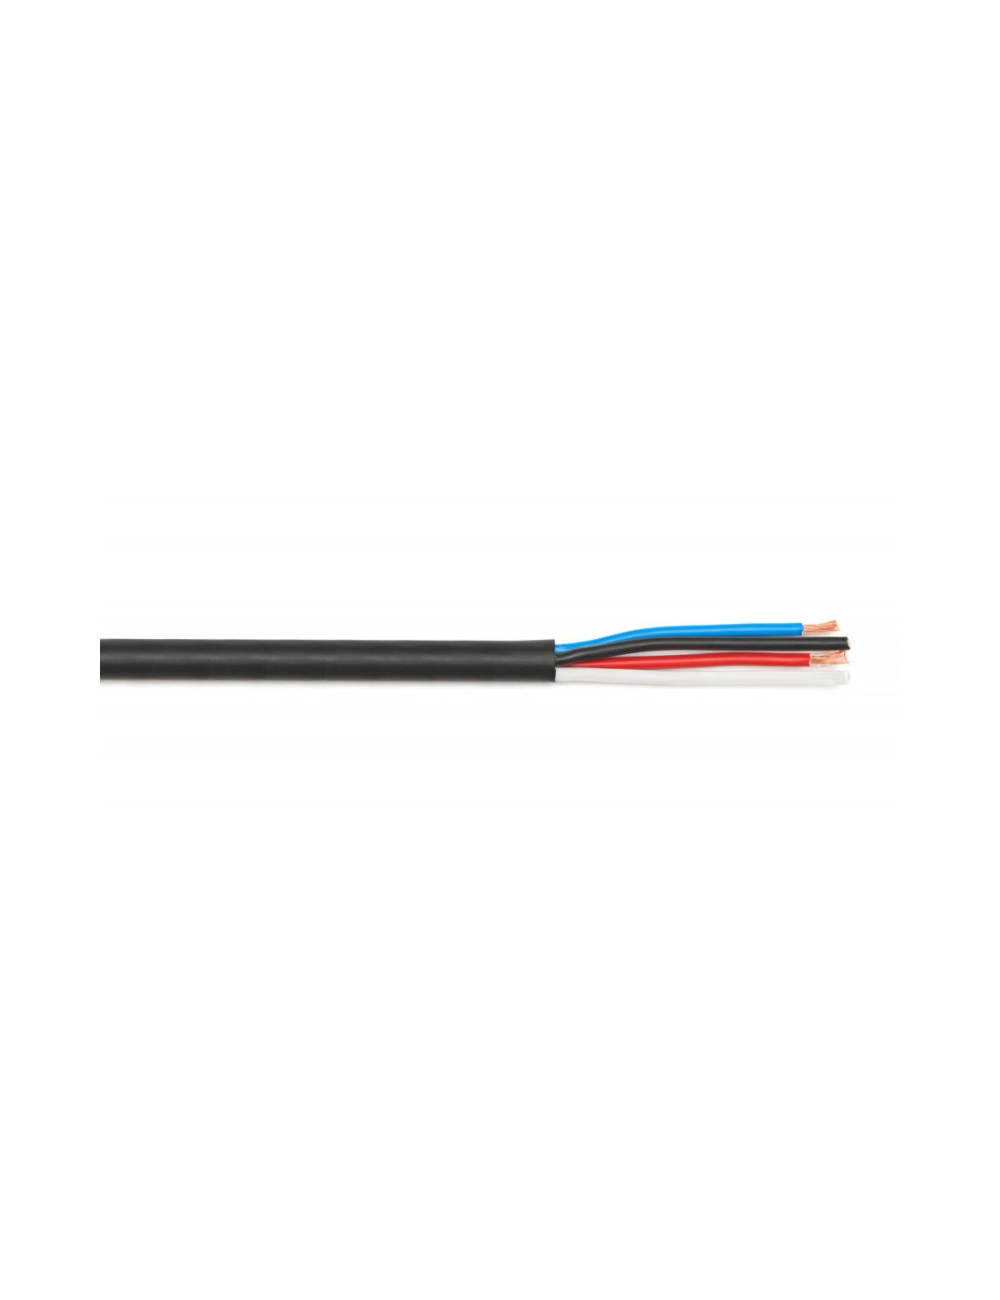 HP cable 4x2.5mm2 (per meter)